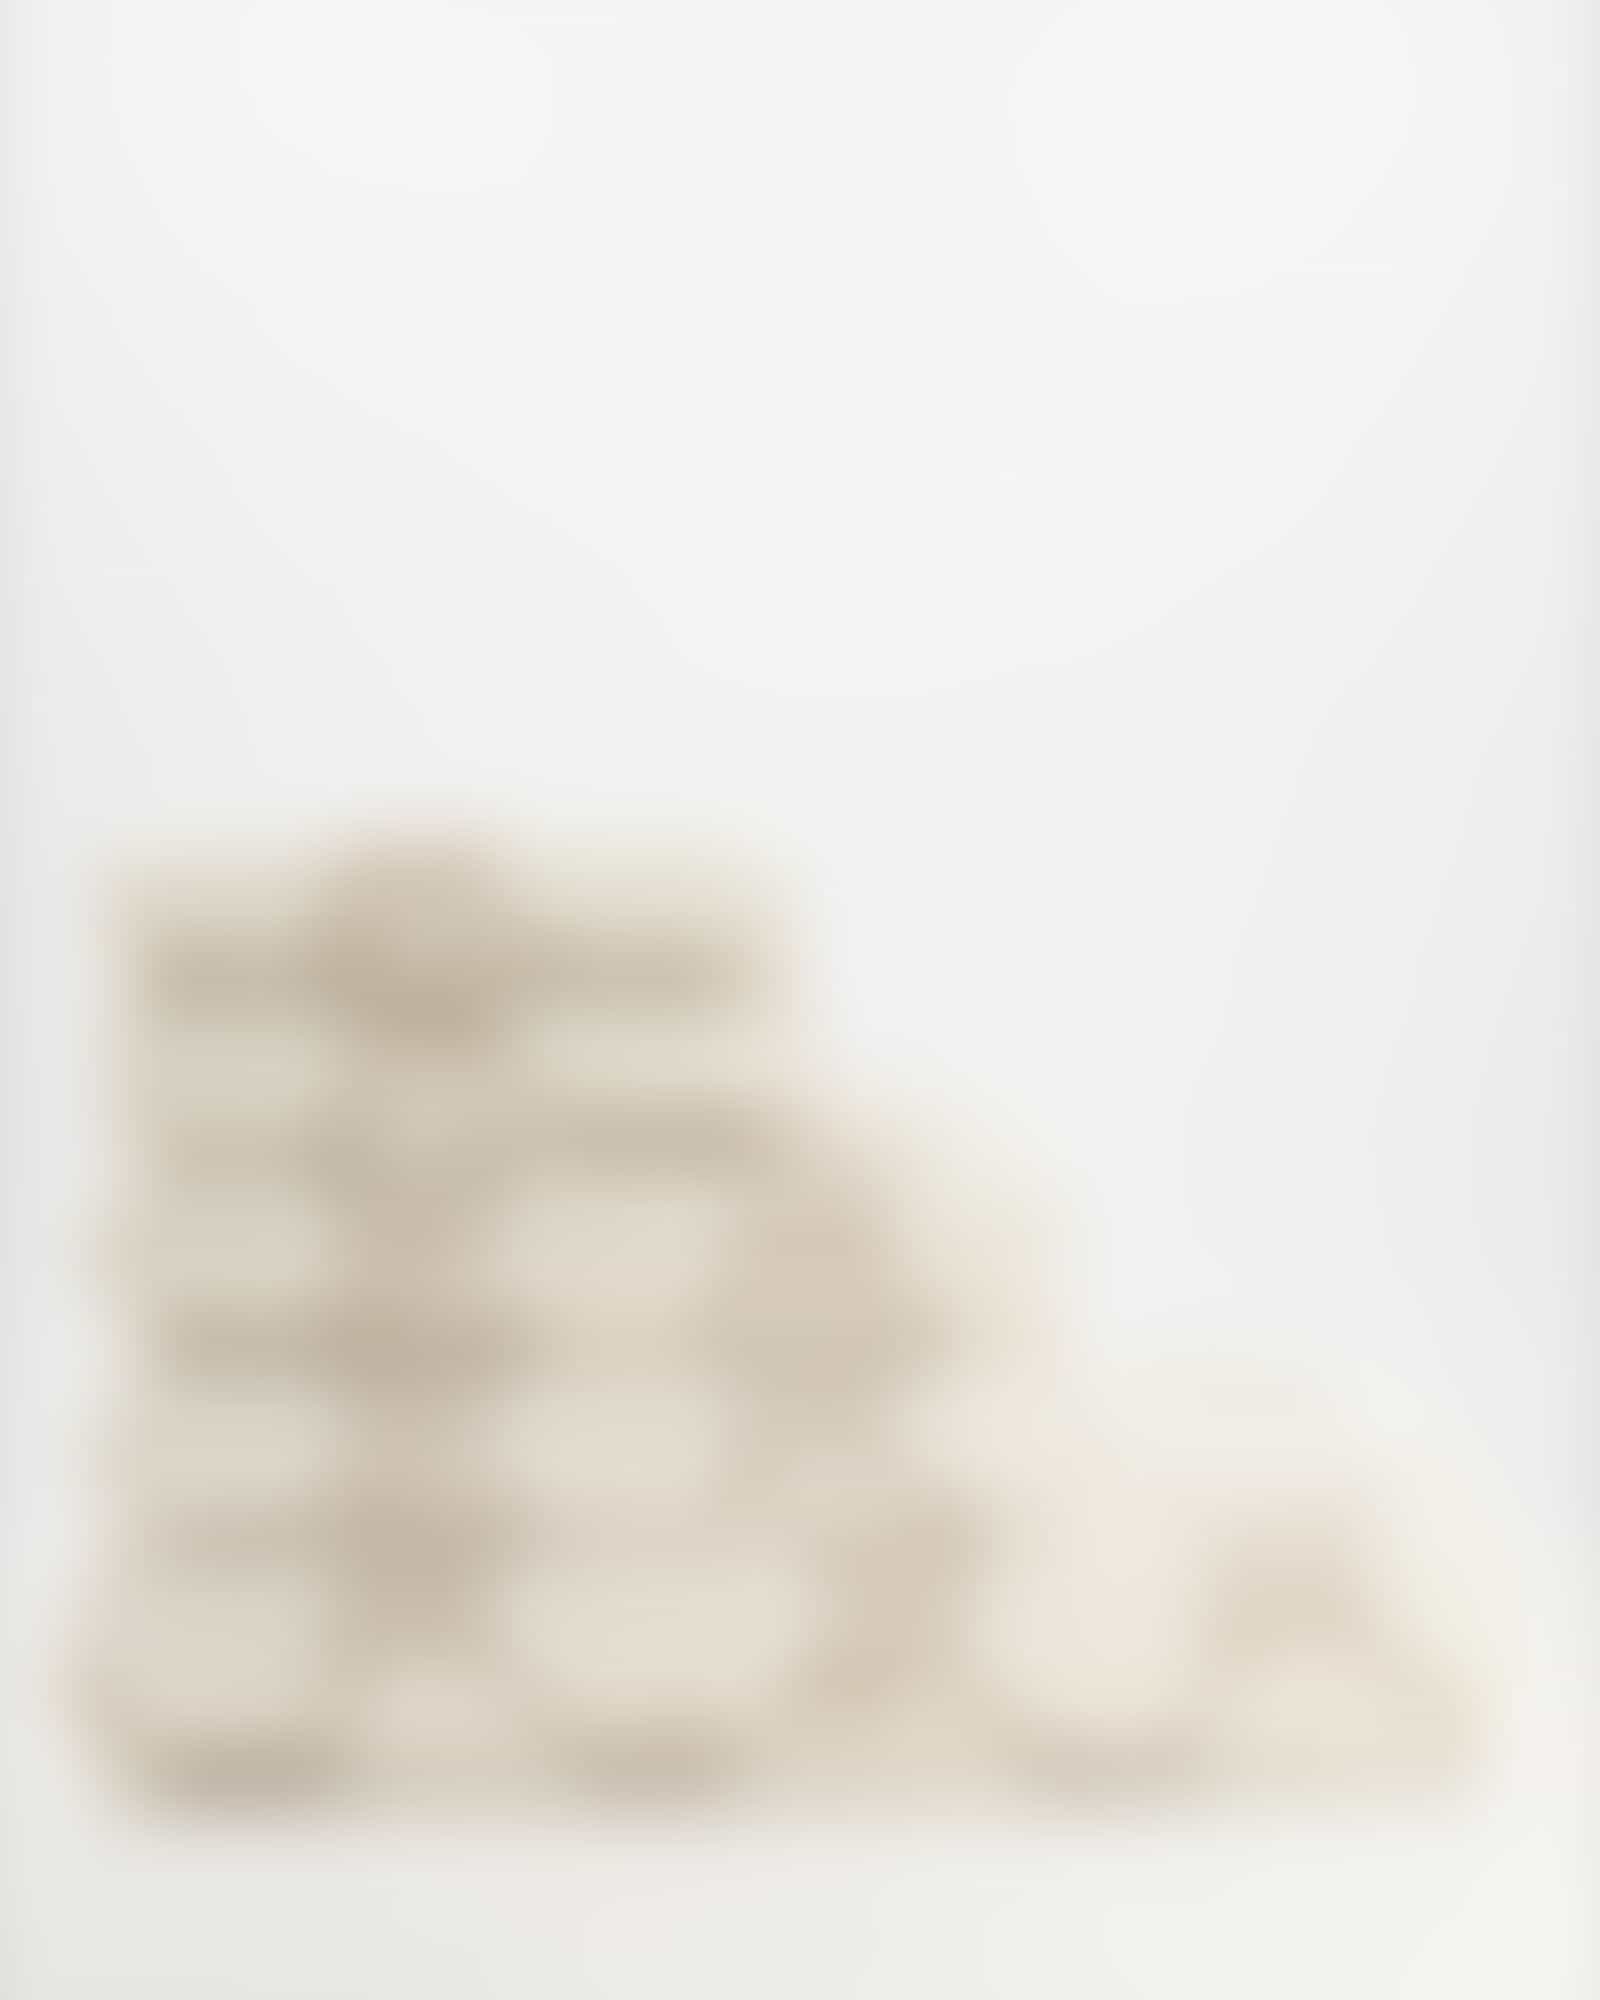 JOOP! Classic - Cornflower 1611 - Farbe: Creme - 36 - Handtuch 50x100 cm